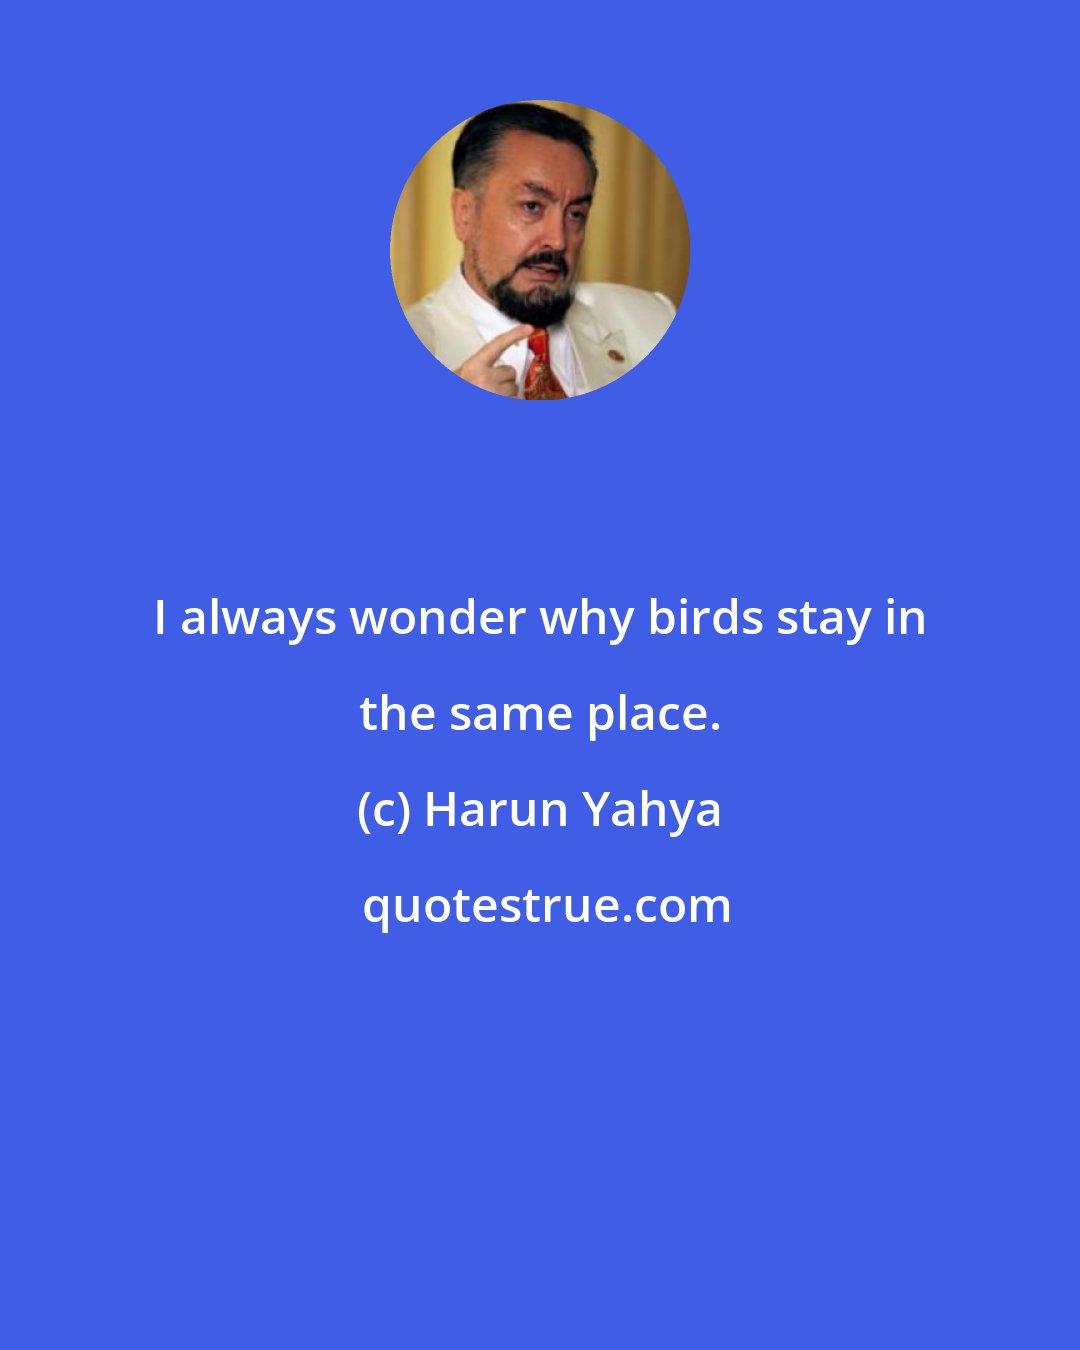 Harun Yahya: I always wonder why birds stay in the same place.